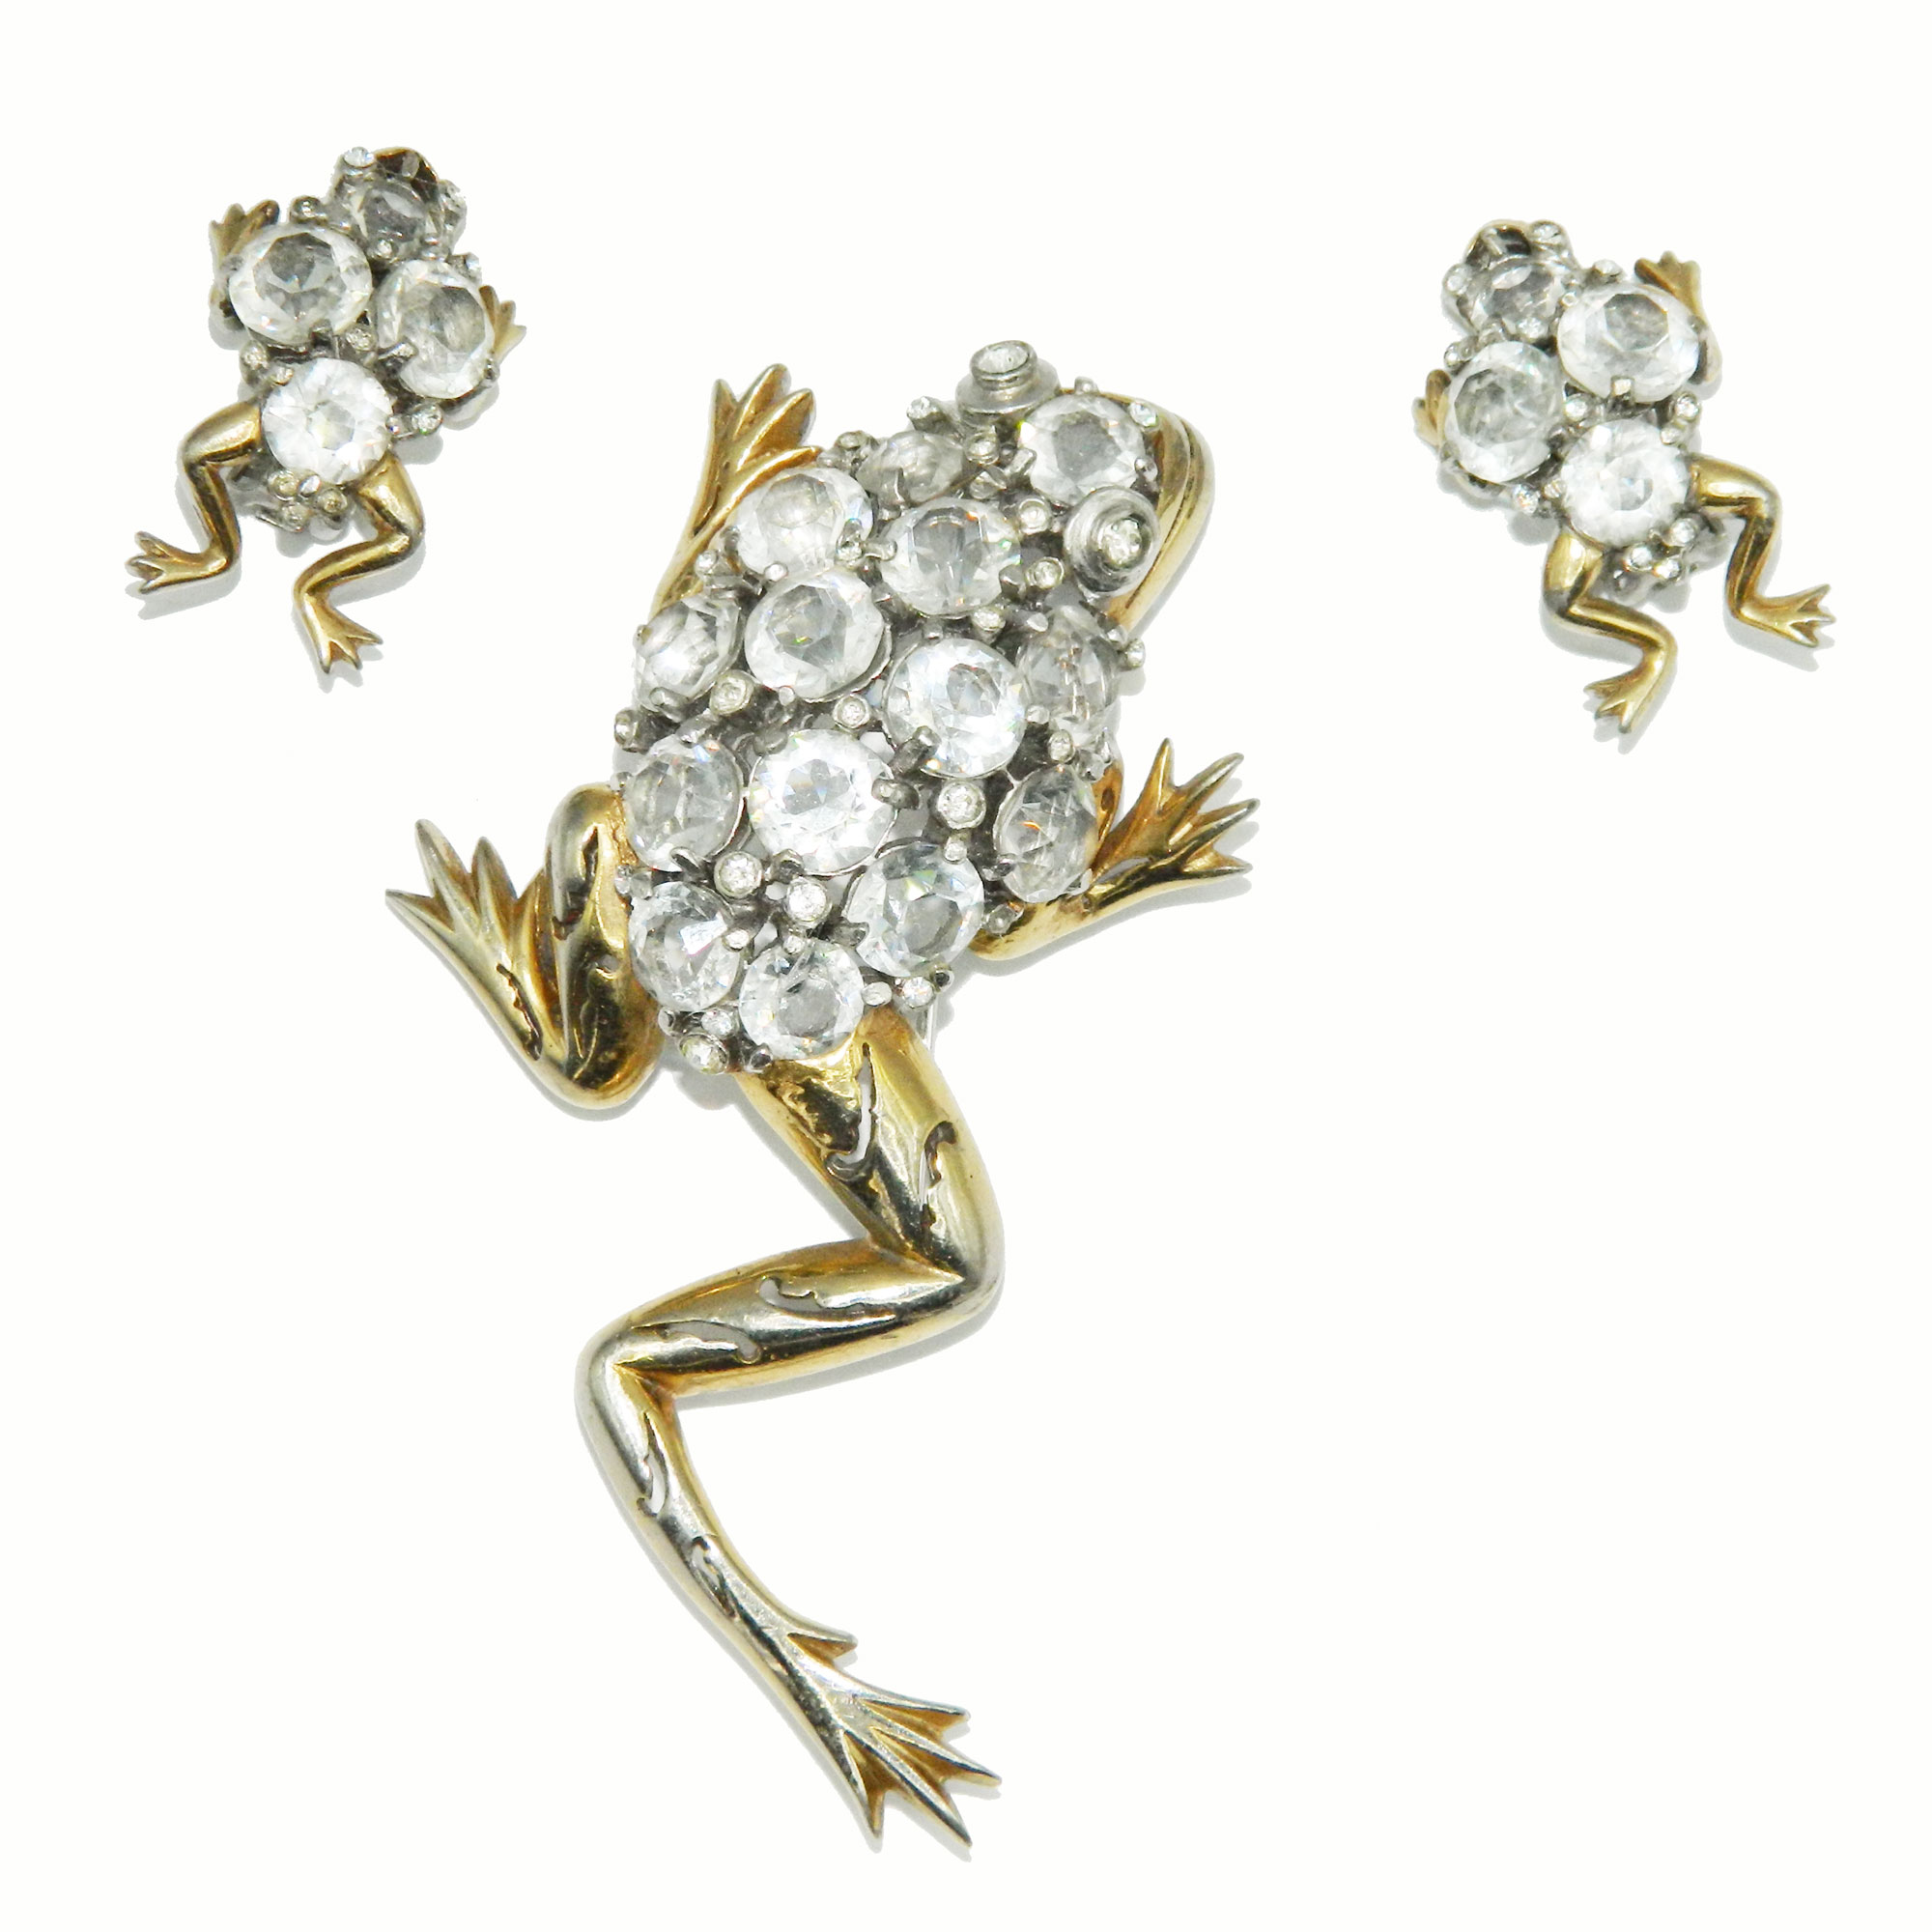 1940s Reja rhinestone frog brooch and earring set